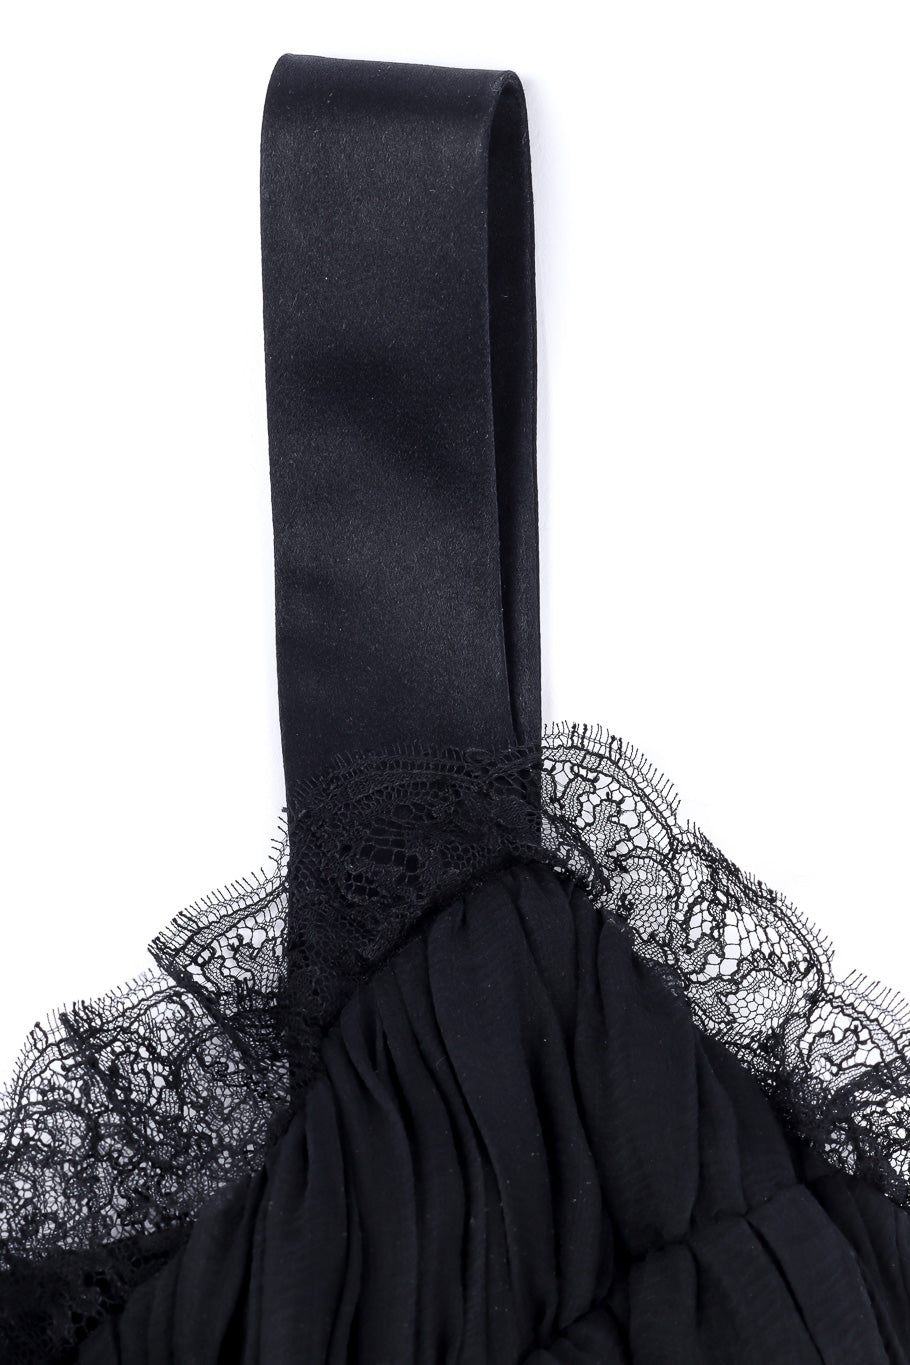 Mini dress by Chanel flat lay strap @recessla